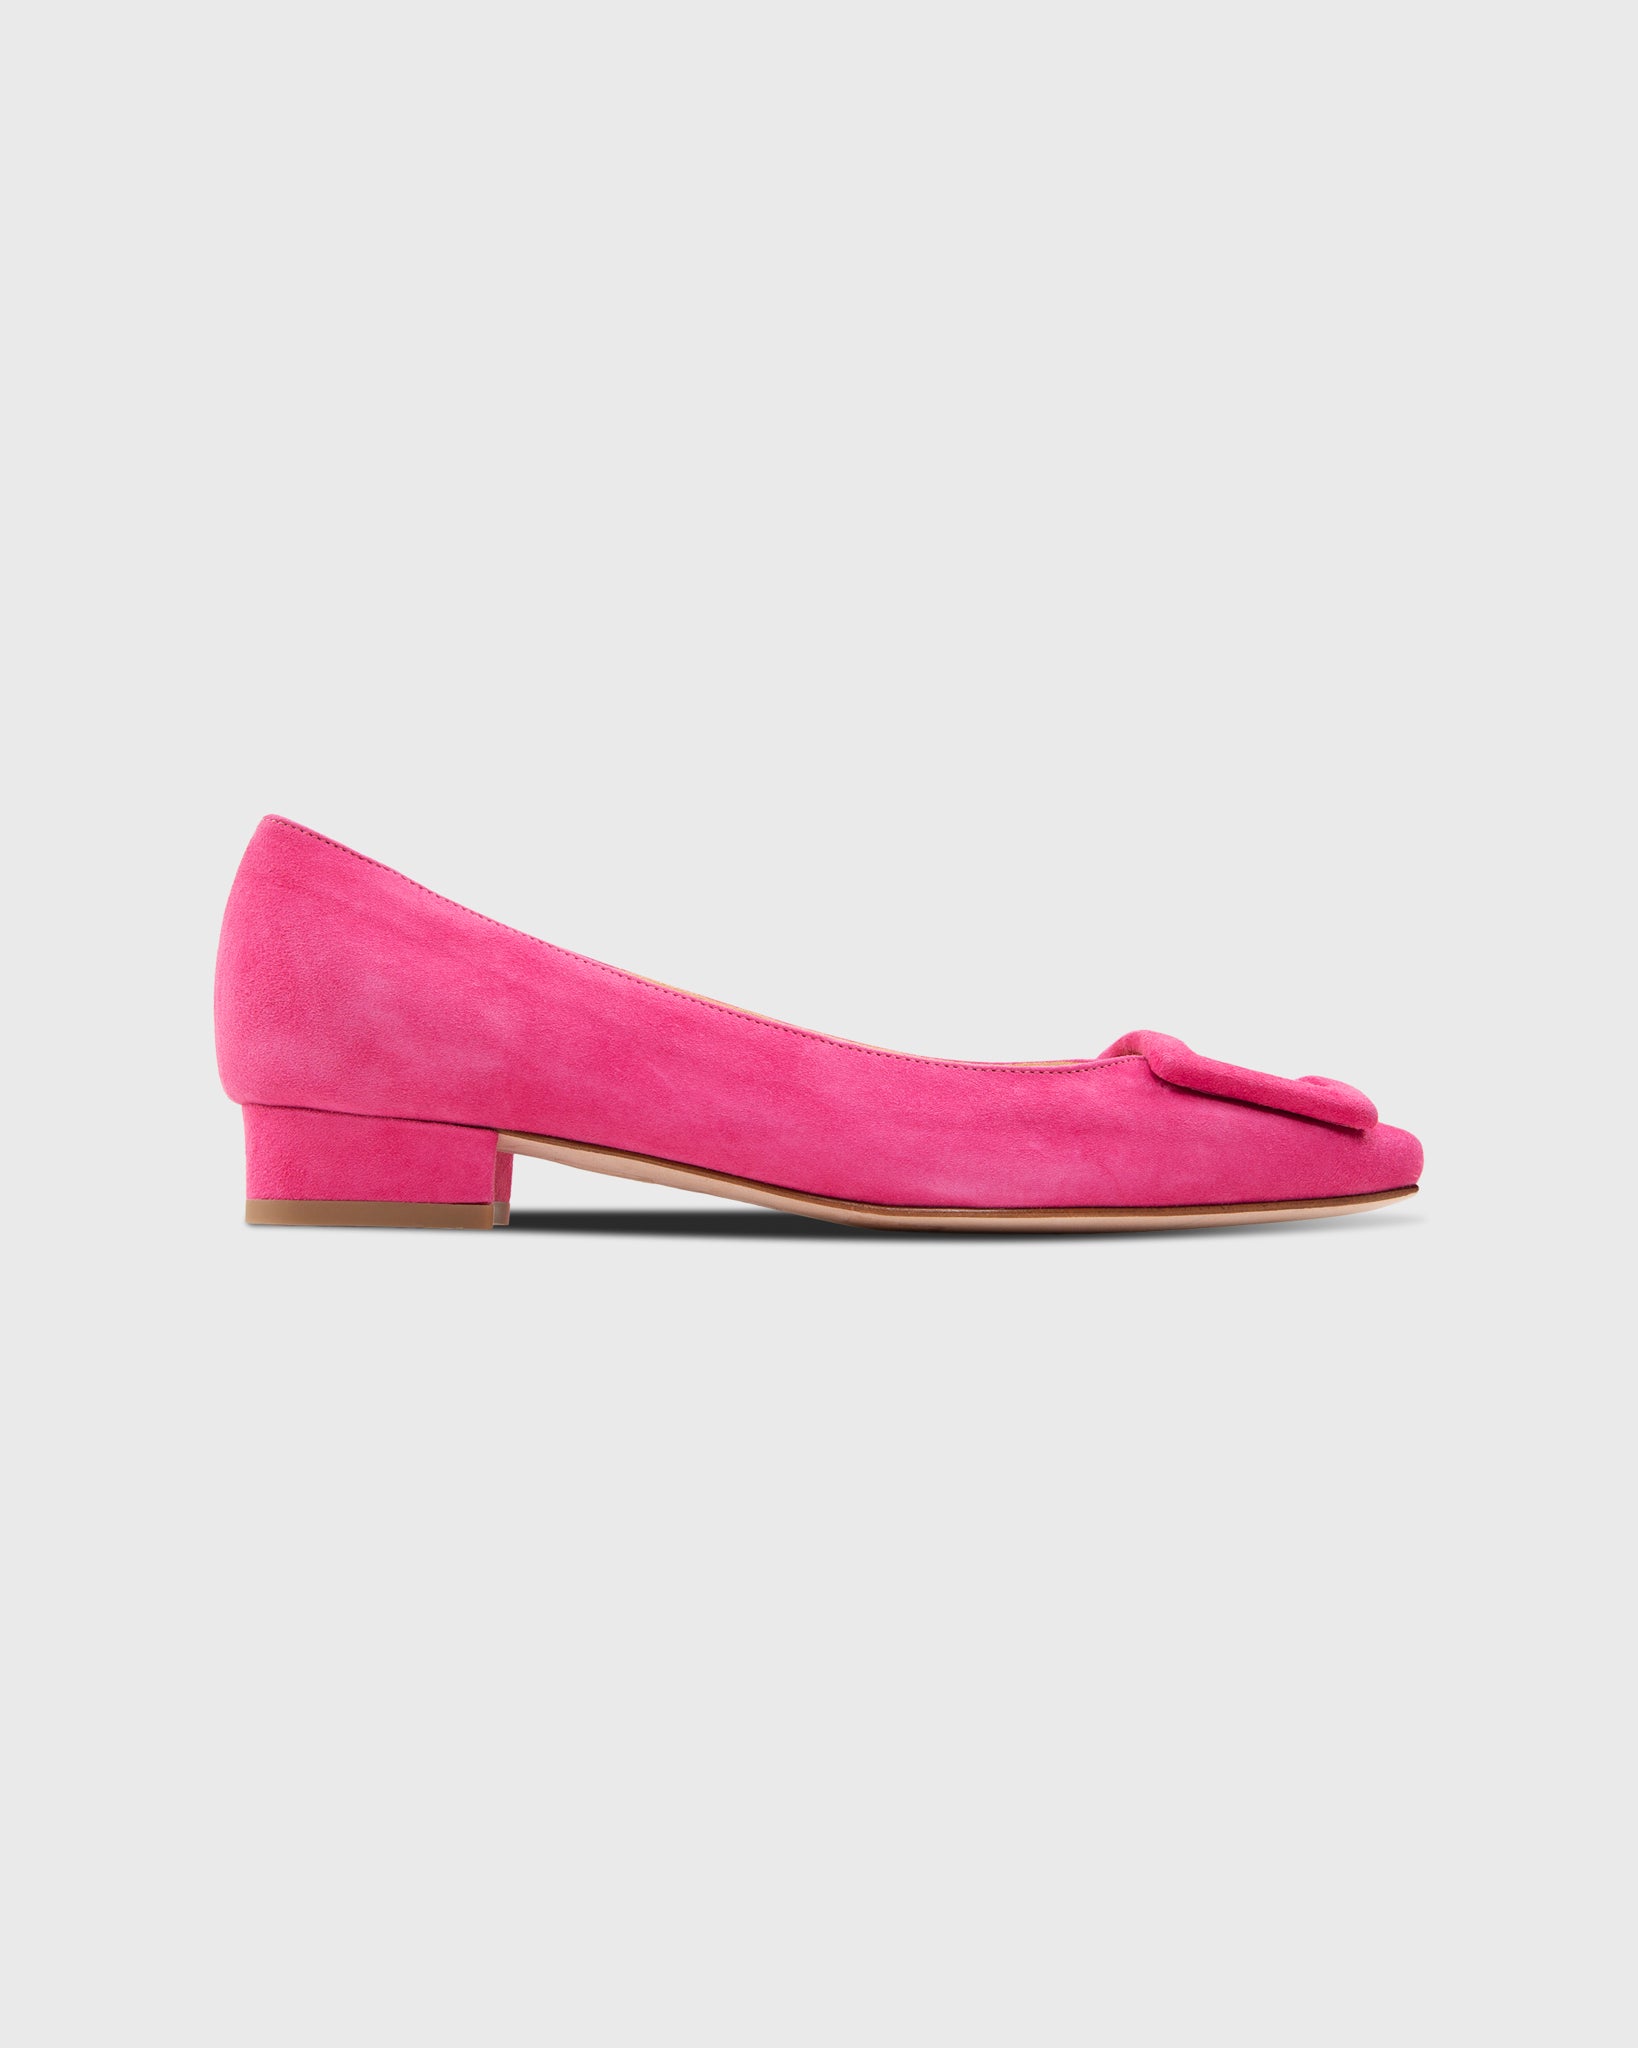 Buckle Shoe in Pretty Pink Suede